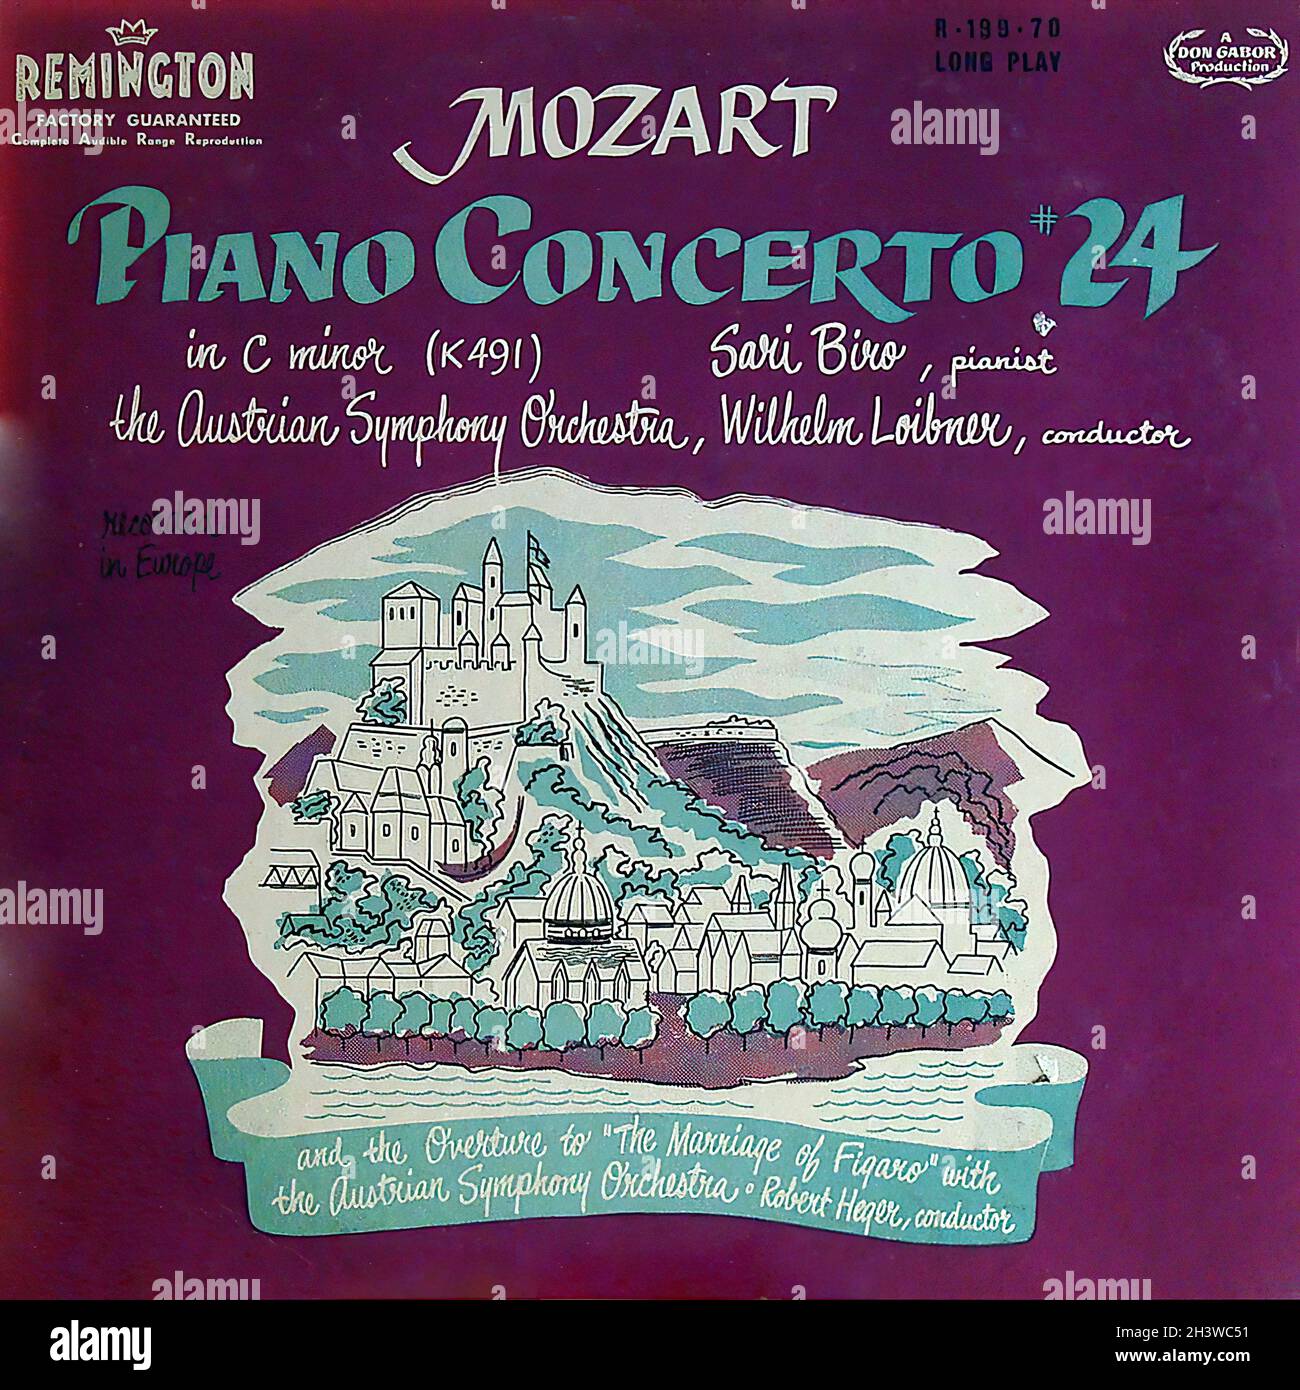 Mozart Piano Concerto 24 - Remington LP - musique classique Vintage Vinyl  Record Photo Stock - Alamy